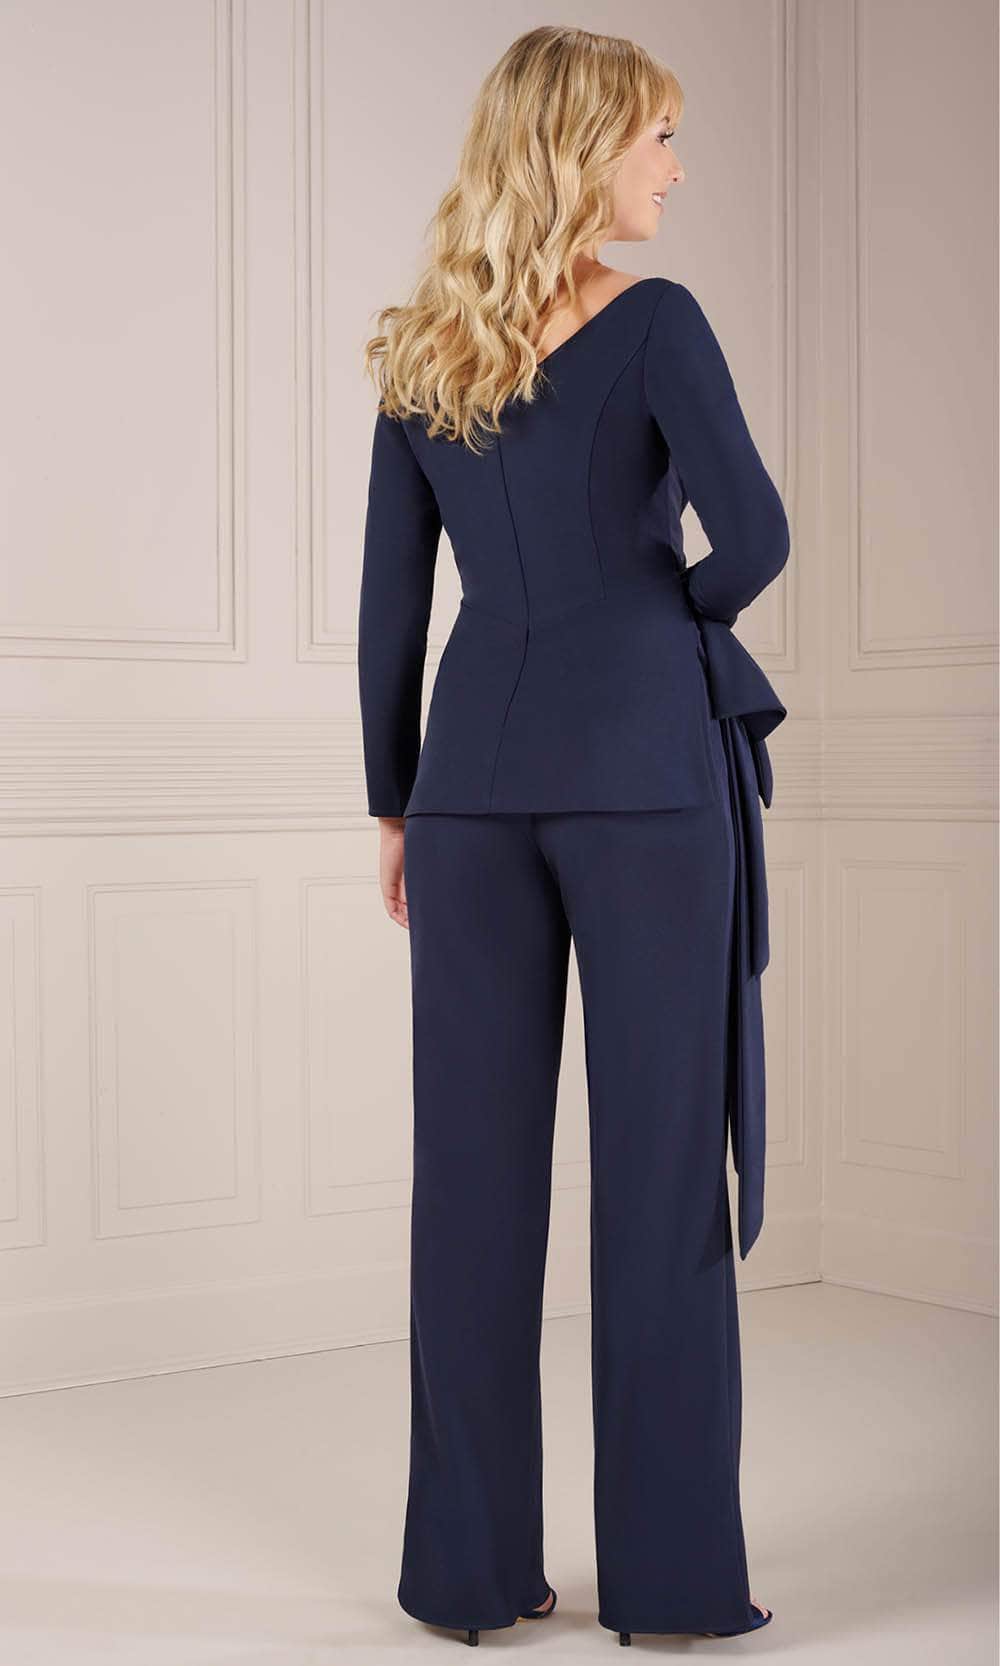 Christina Wu Elegance 17153 - Wrap Style Jumpsuit Formal Pantsuits